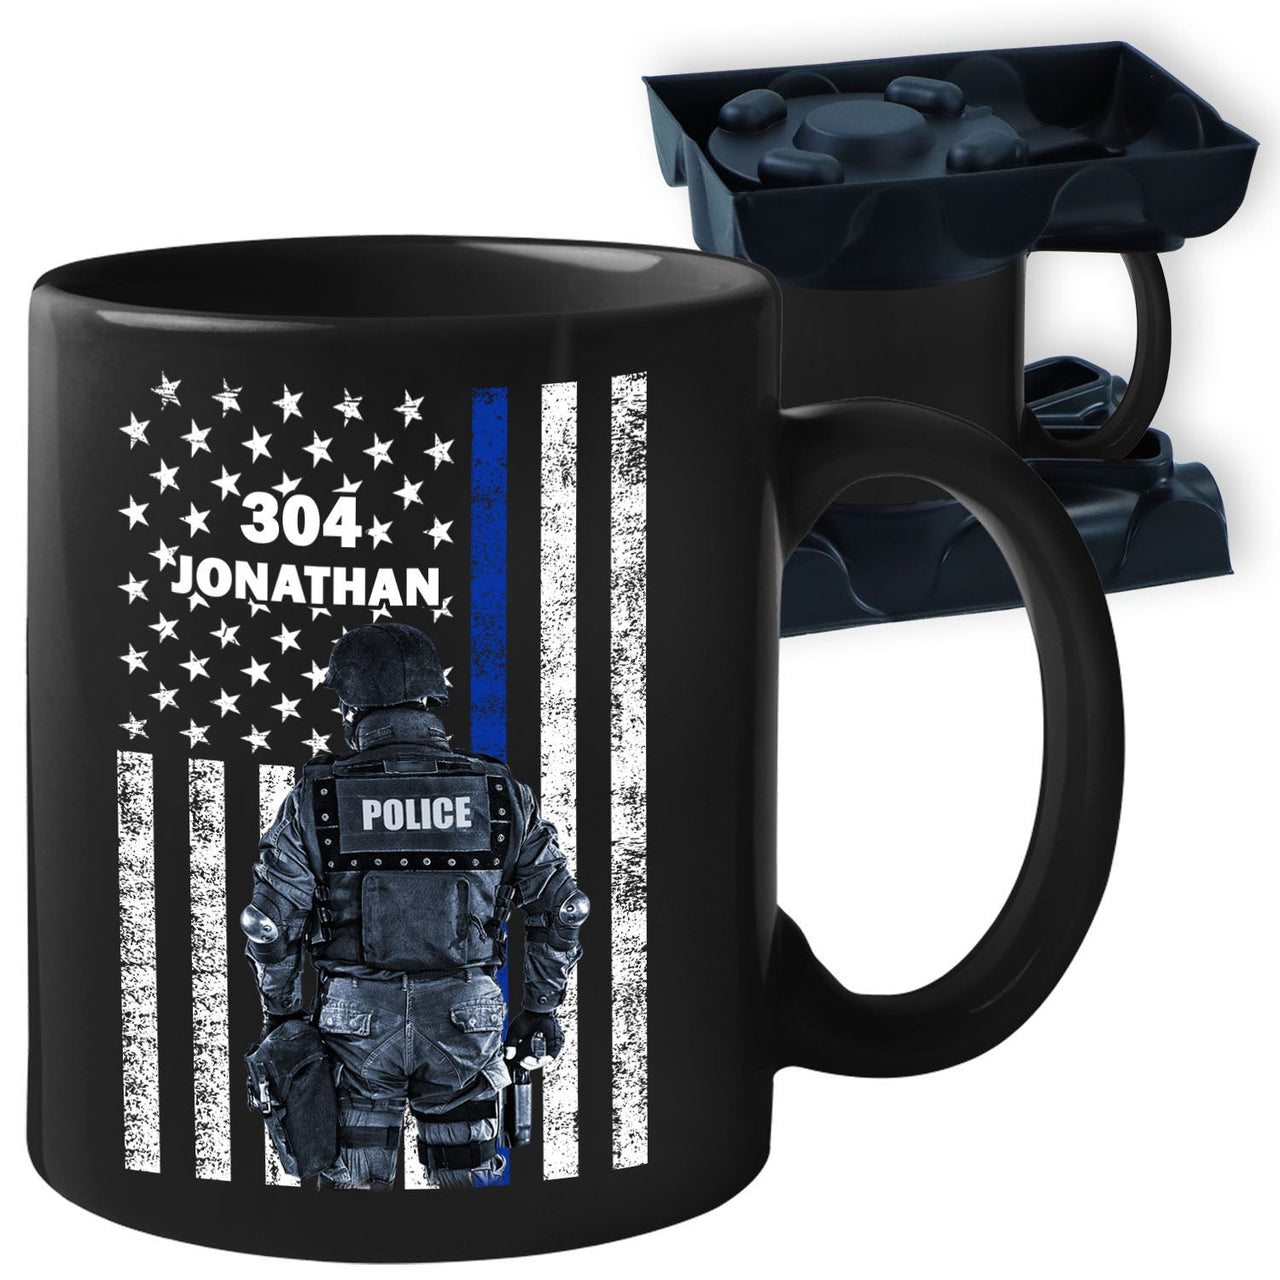 Personalized Custom Name Badge Number Policeman Police Officer Thin Blue Line Lives Matter Back Law Enforcement American Flag First Responder Ceramic Coffee Tea Mug 11 - 15 oz Cup.